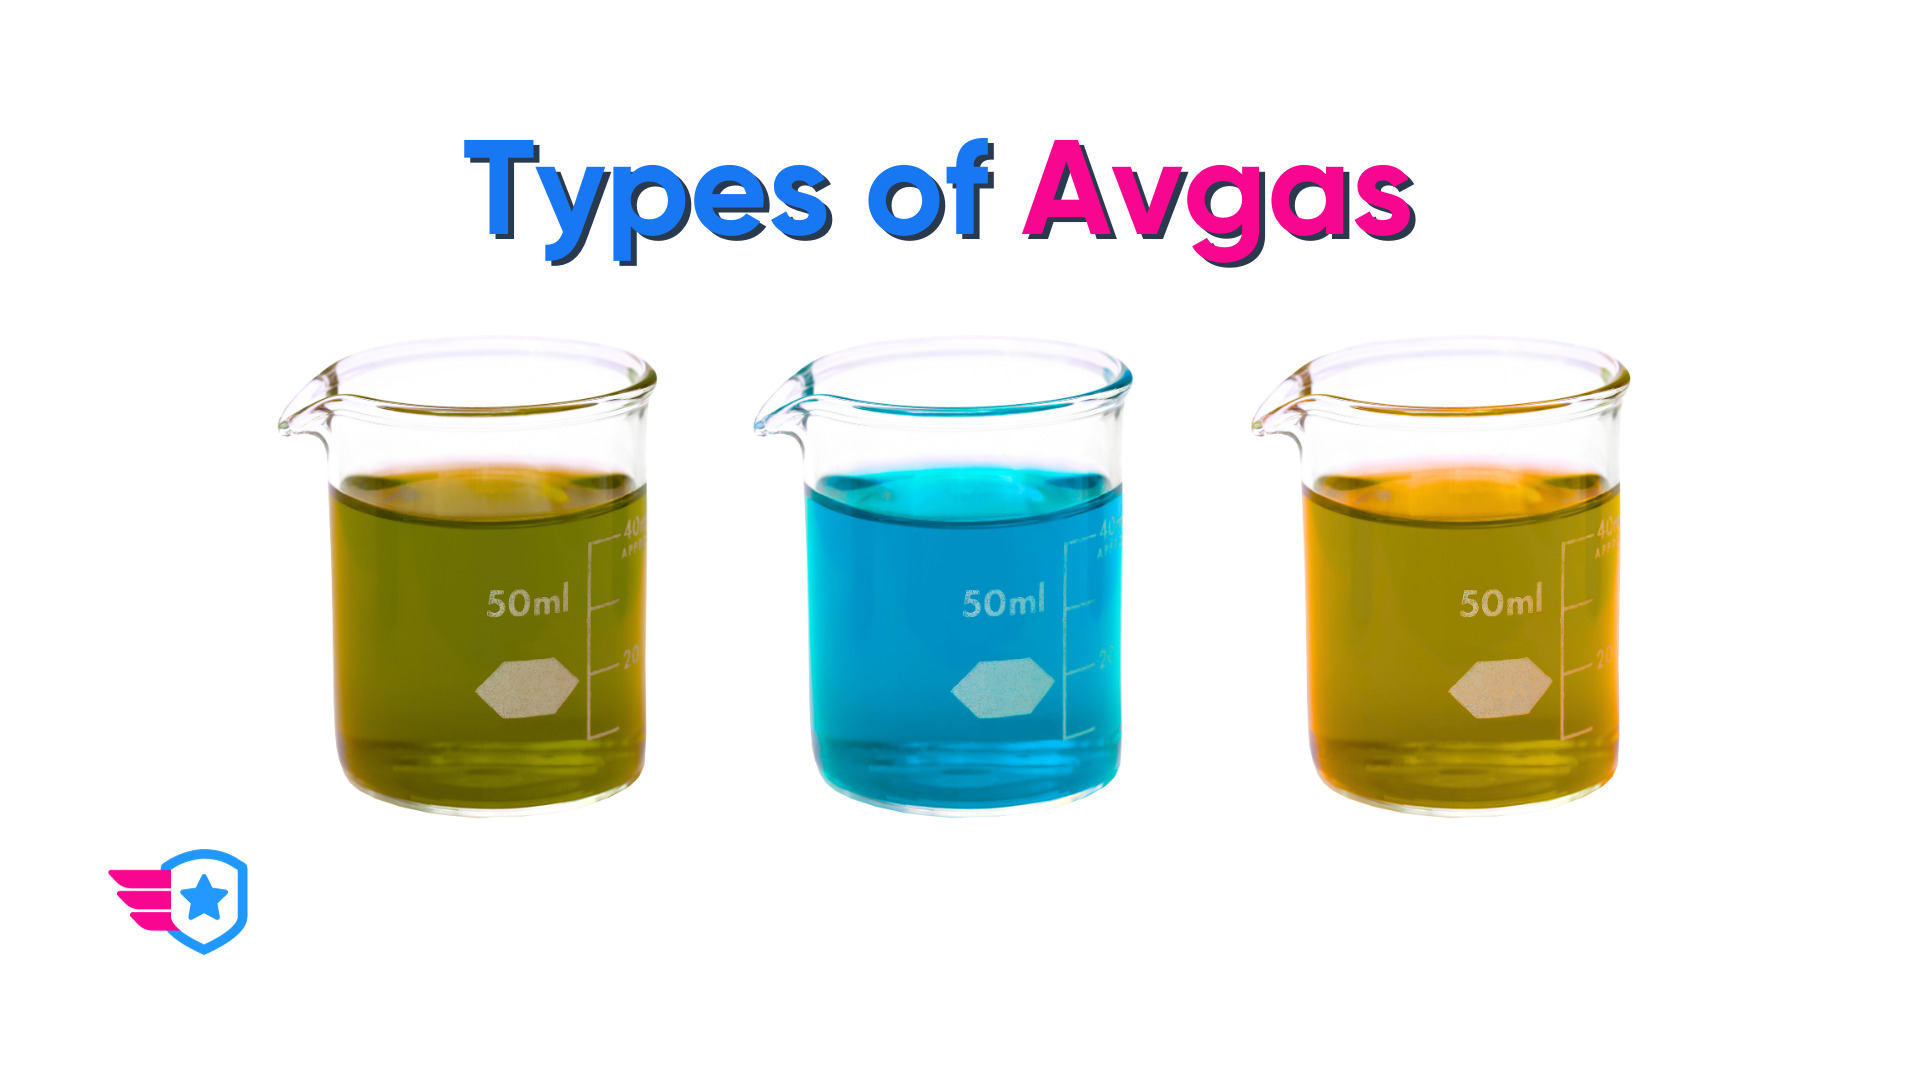 Types of Avgas Explained